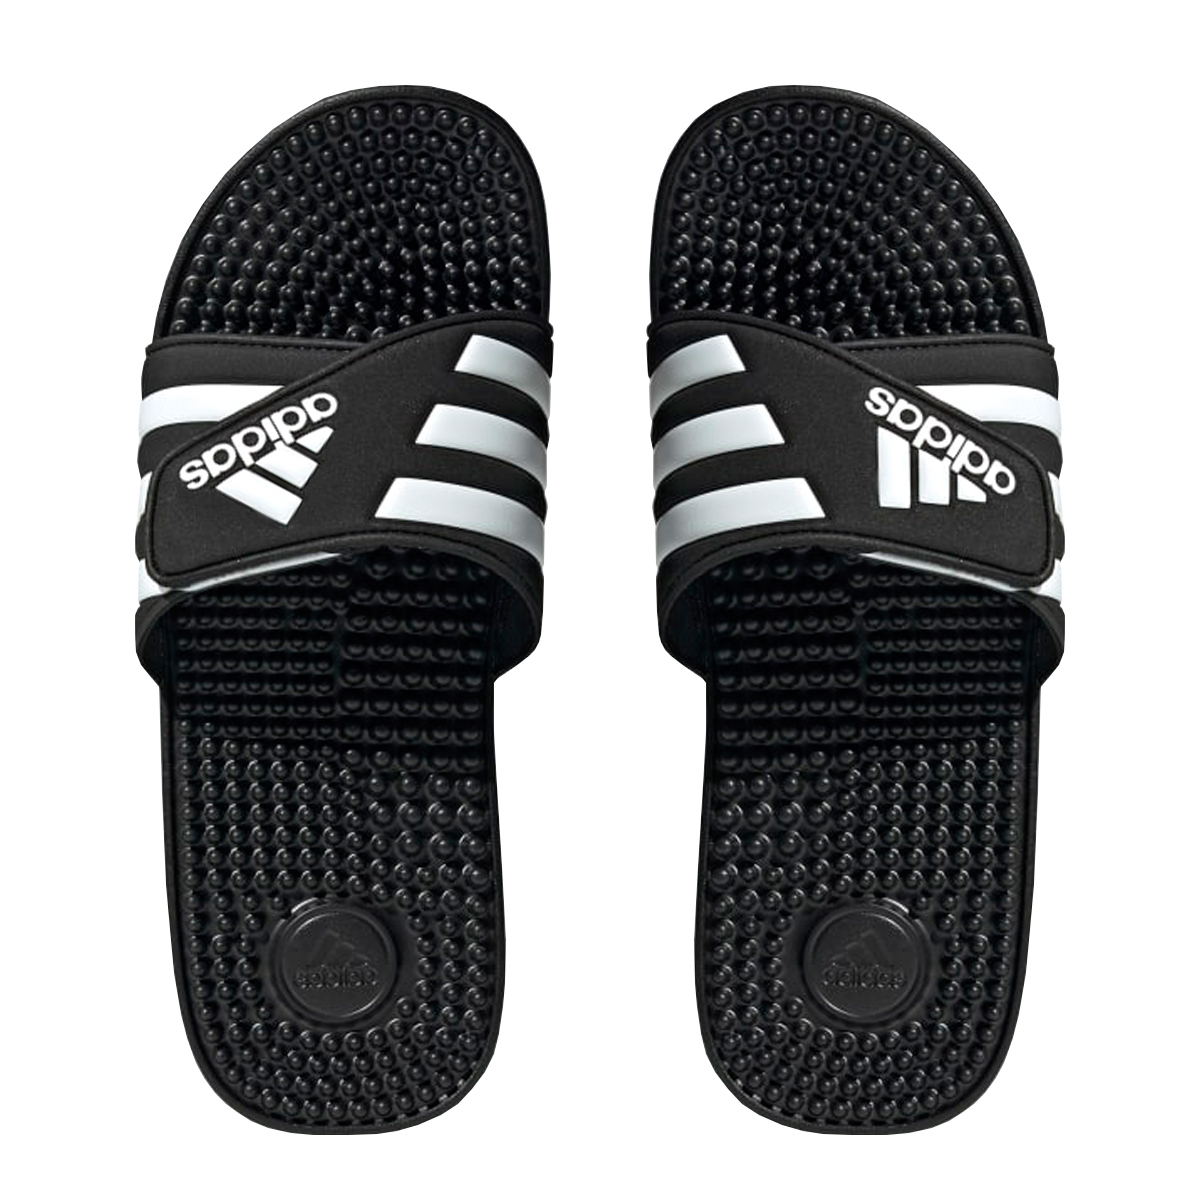 Adidas Adissage Sandals Unisex | Black & White Sandals